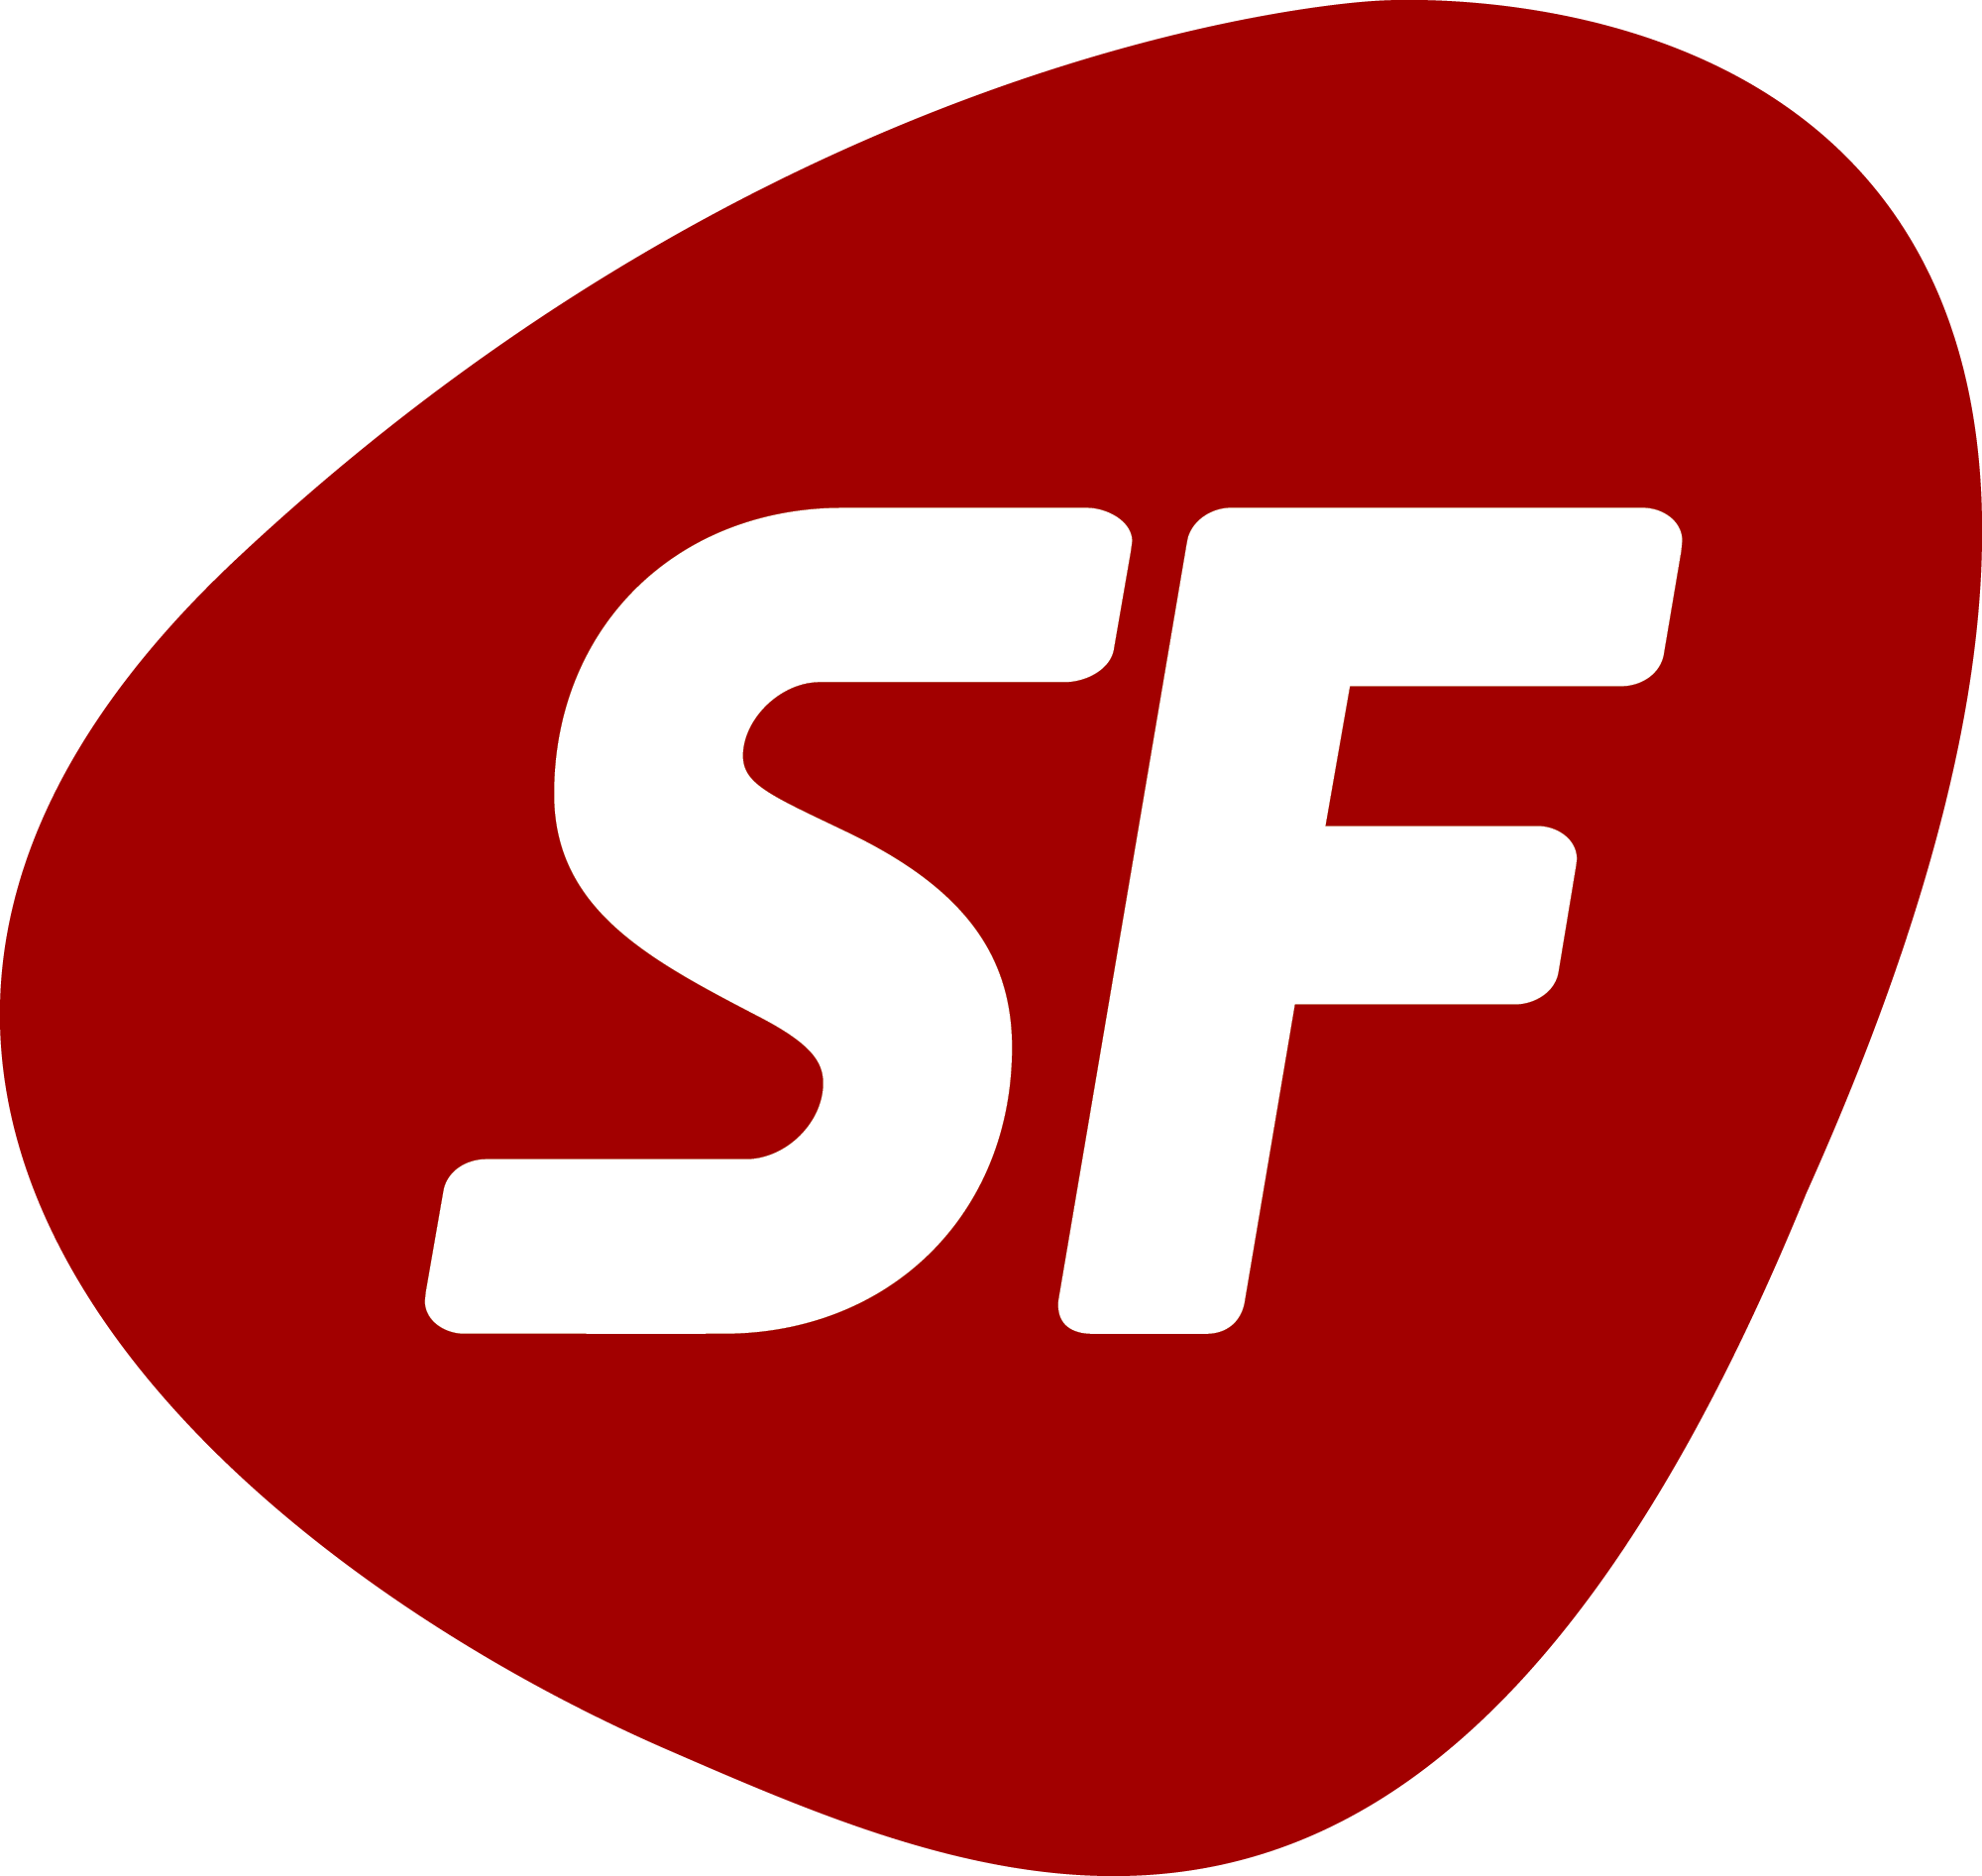 SF Logo - Image - SF logo 100 100 20.png | Logopedia | FANDOM powered by Wikia